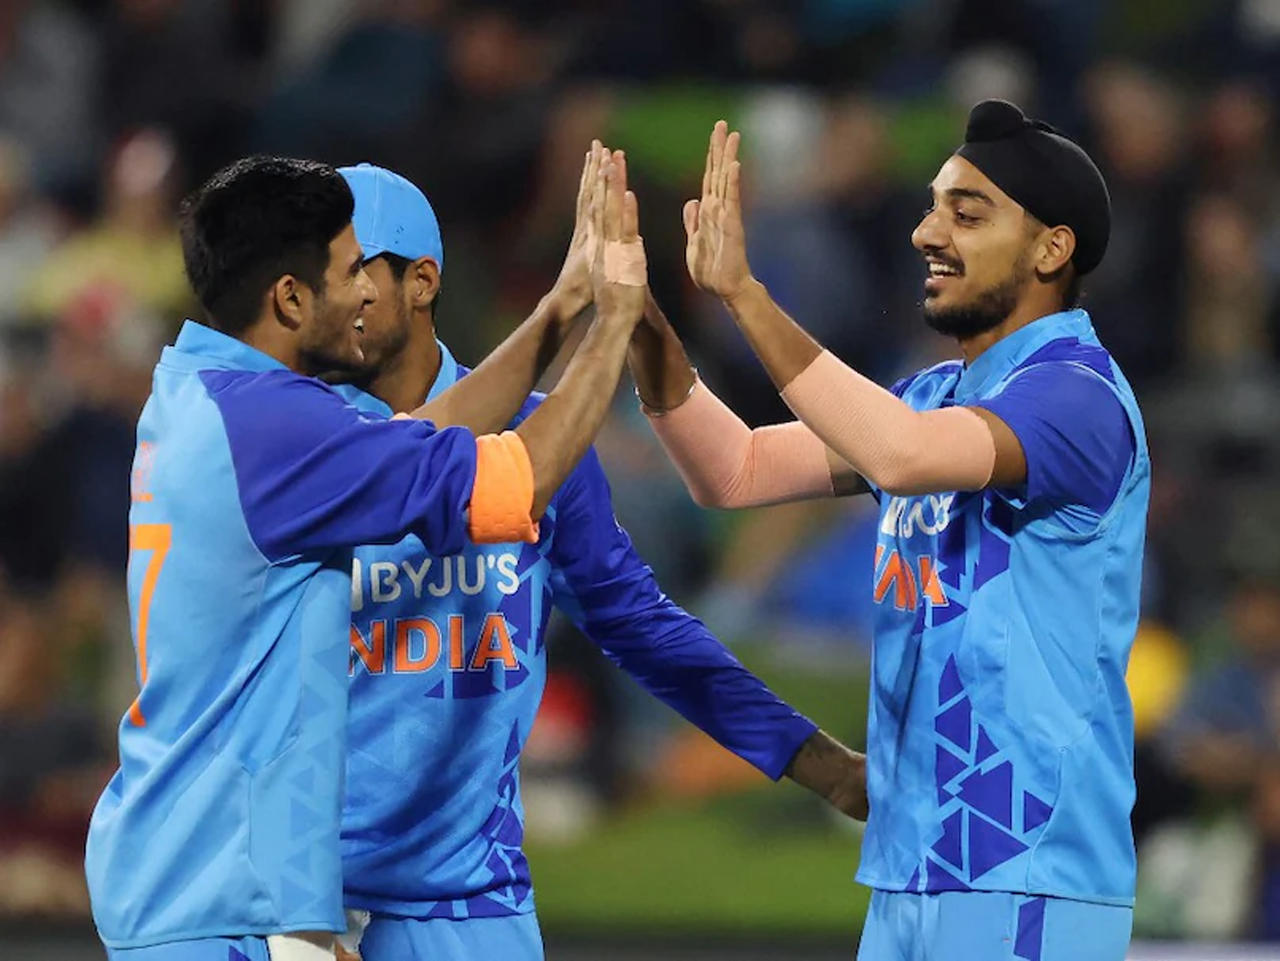 IND vs న్యూజిలాండ్ | భారత్ తన రెండవ T20 మ్యాచ్‌లో న్యూజిలాండ్‌ను ఓడించింది. న్యూజిలాండ్ 126 పాయింట్లతో నిష్క్రమించింది.